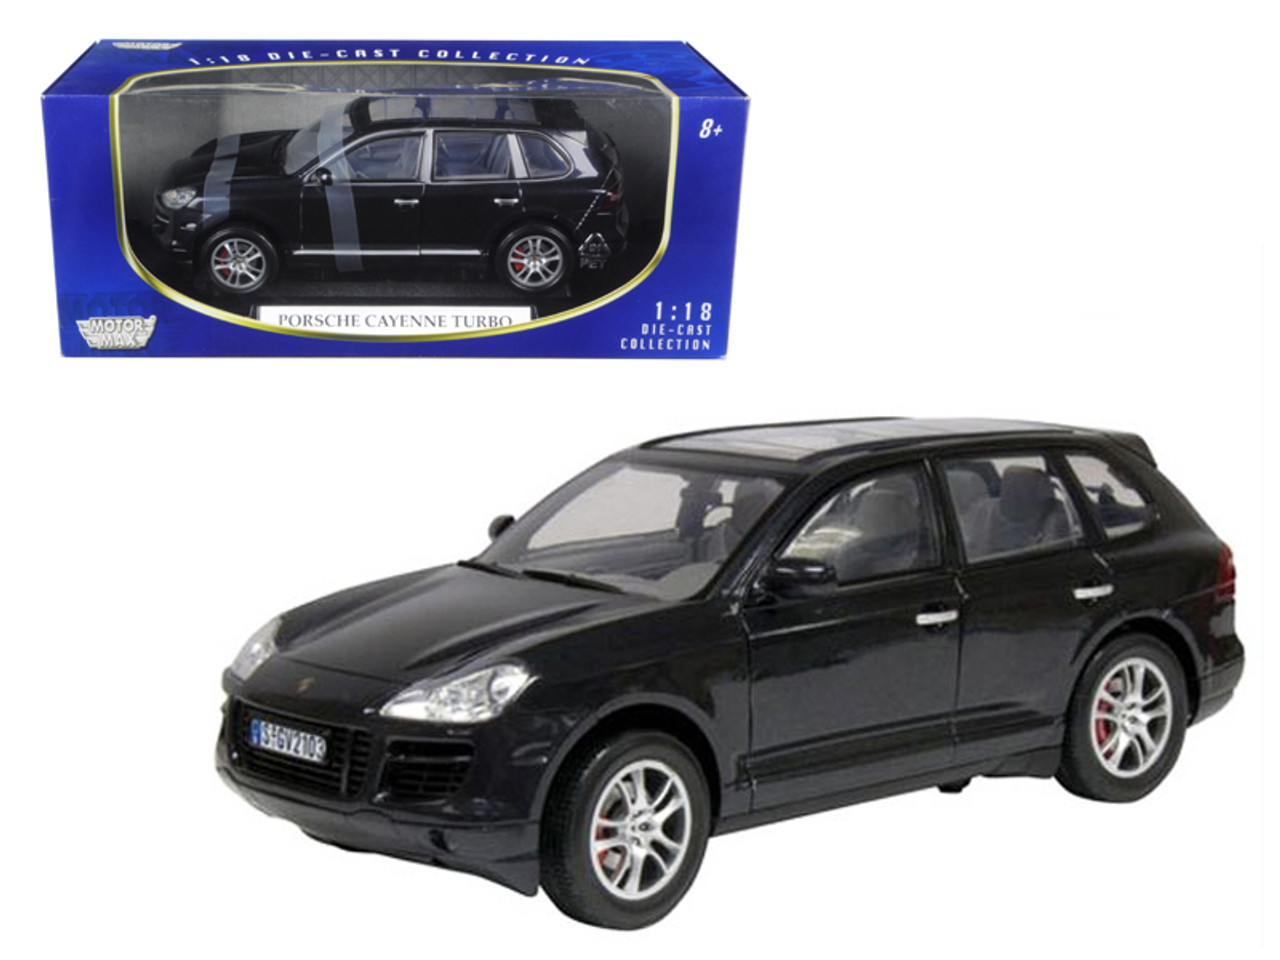 1/18 Motormax 2008 Porsche Cayenne Turbo (Metallic Black) Diecast Car Model